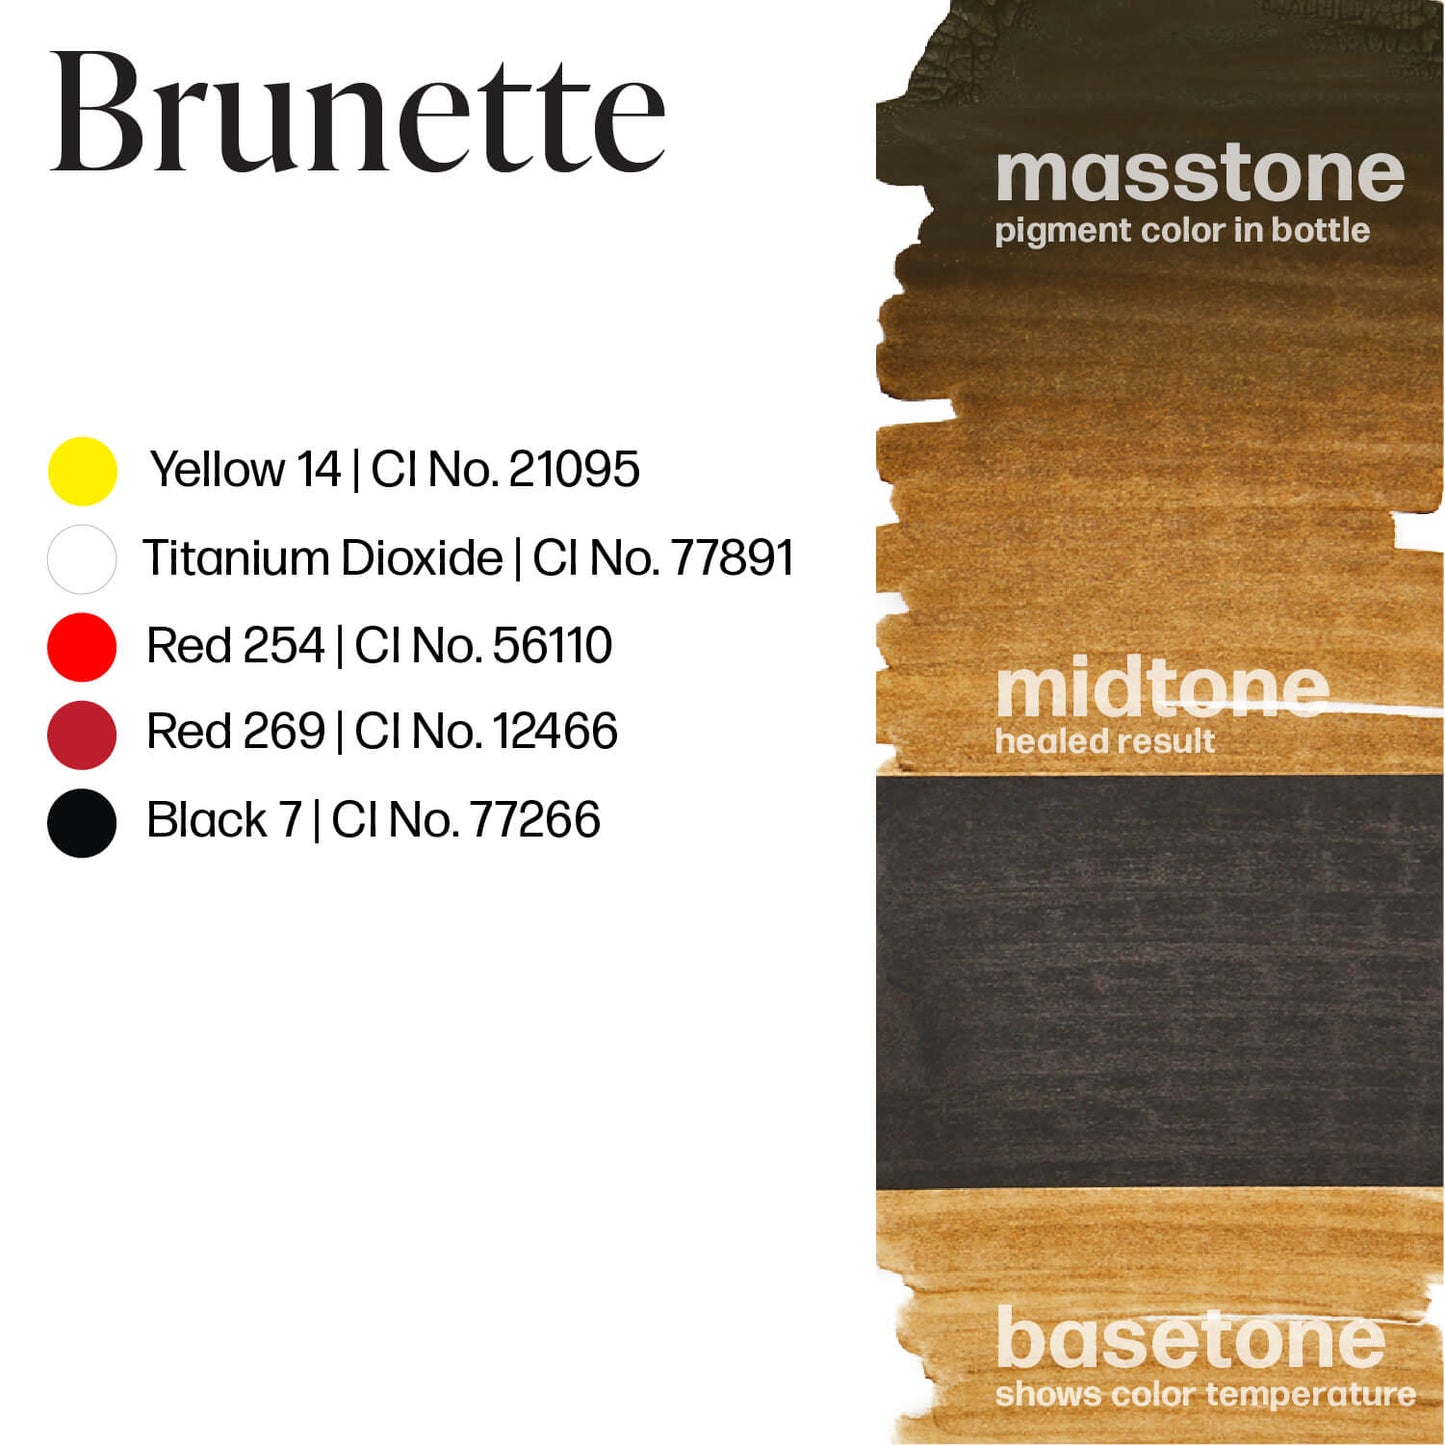 Perma Blend Brunette Brow Ink Masstone Midtone Basetone